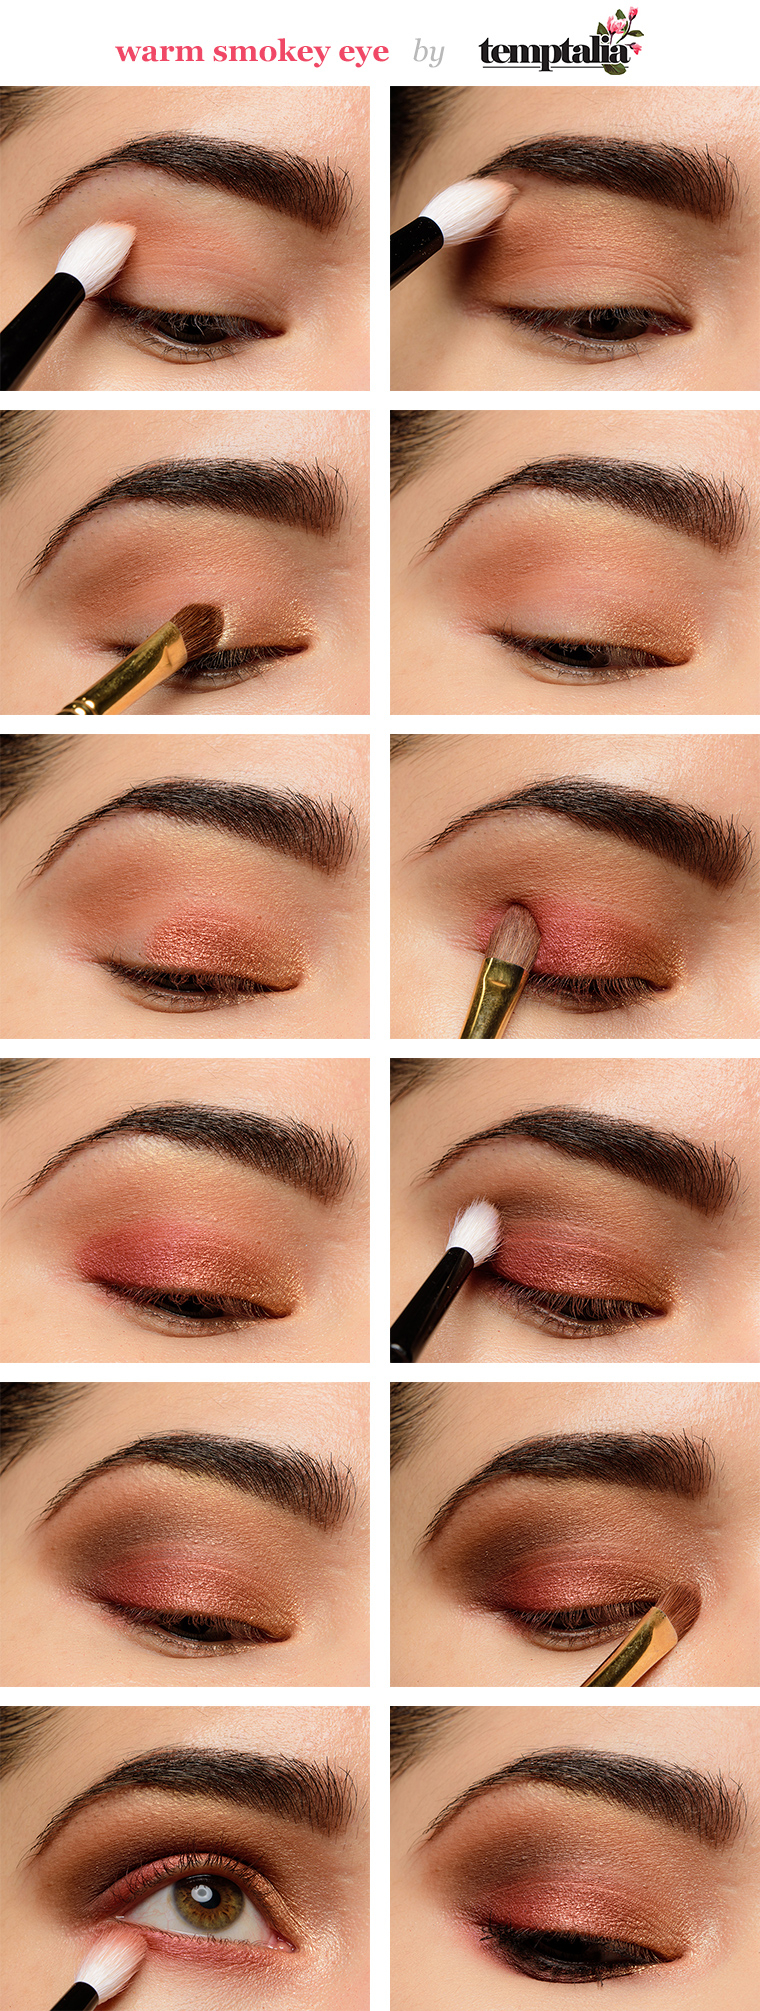 Smokey Eye Makeup Pictures How To Apply Eyeshadow Smokey Eye Makeup Tutorial For Beginners